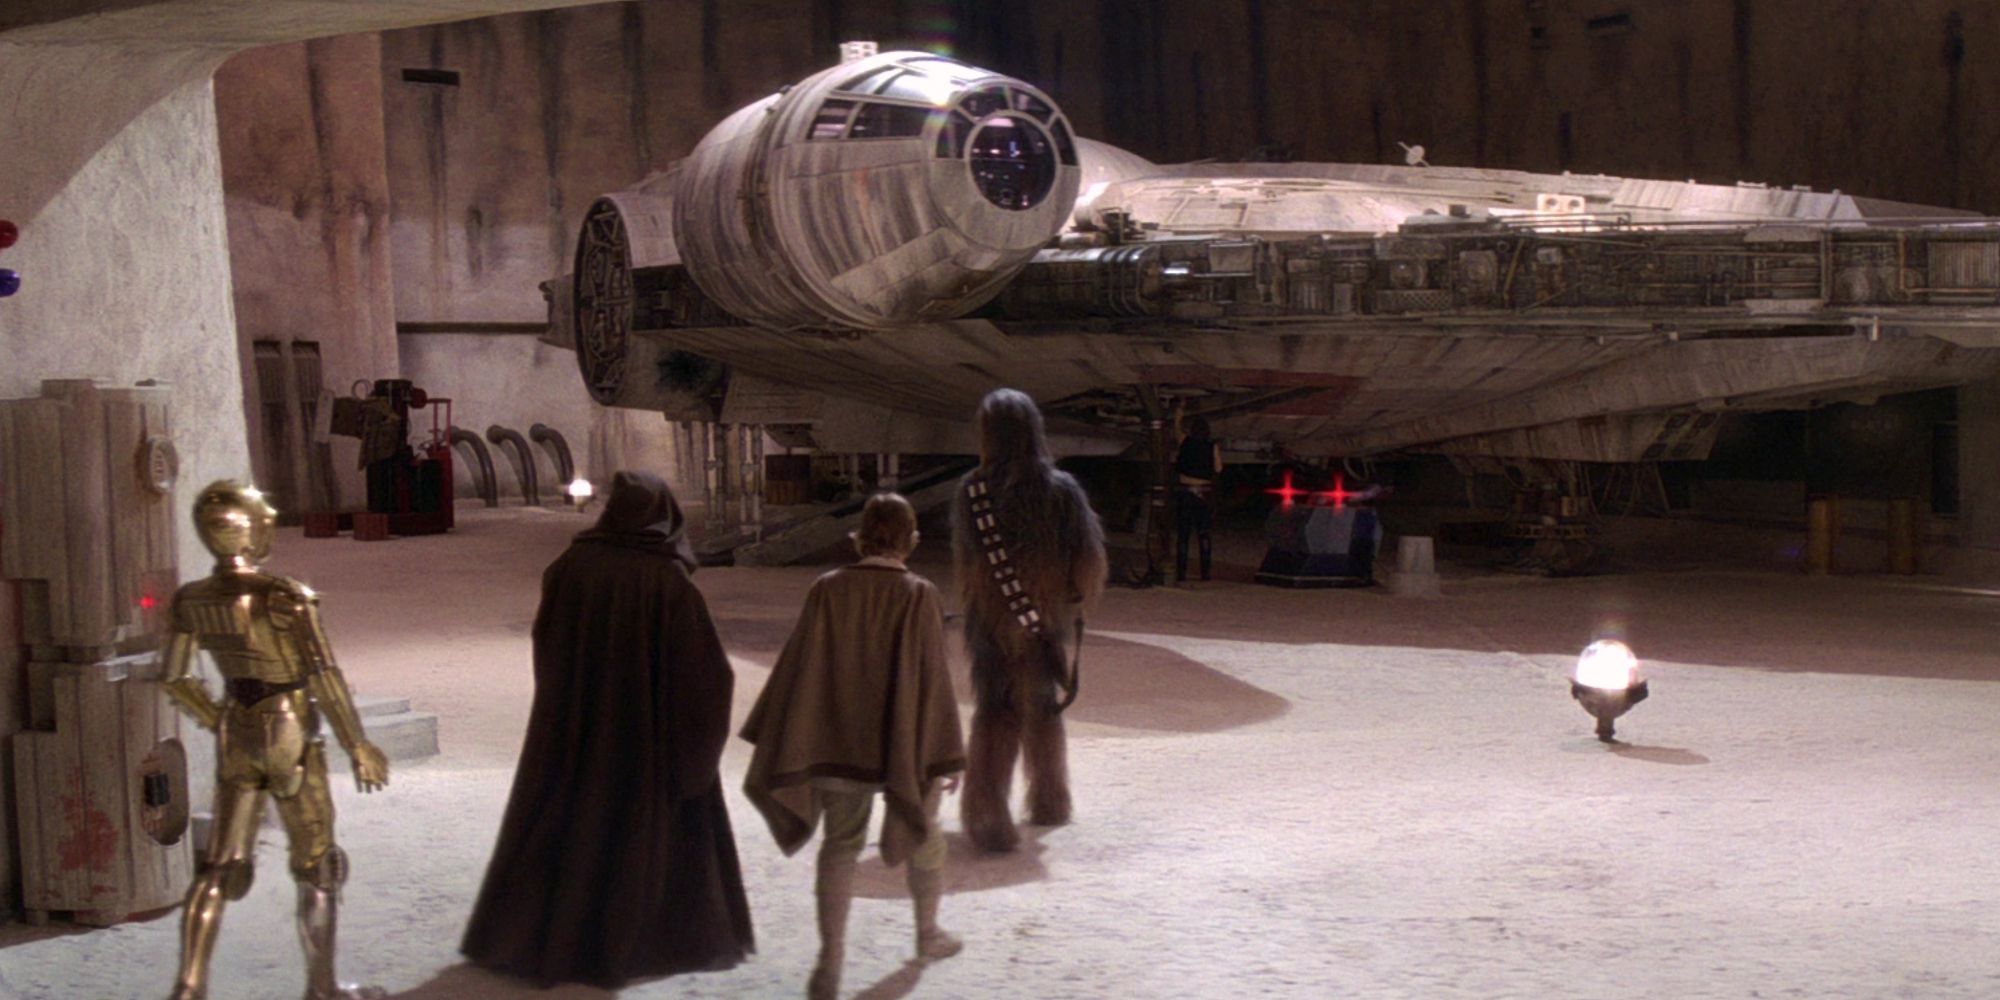 Luke Obi-Wan, C-3PO, and Chewie walking into Docking Bay 94 to meet Han in Star Wars Episode IV; A New Hope